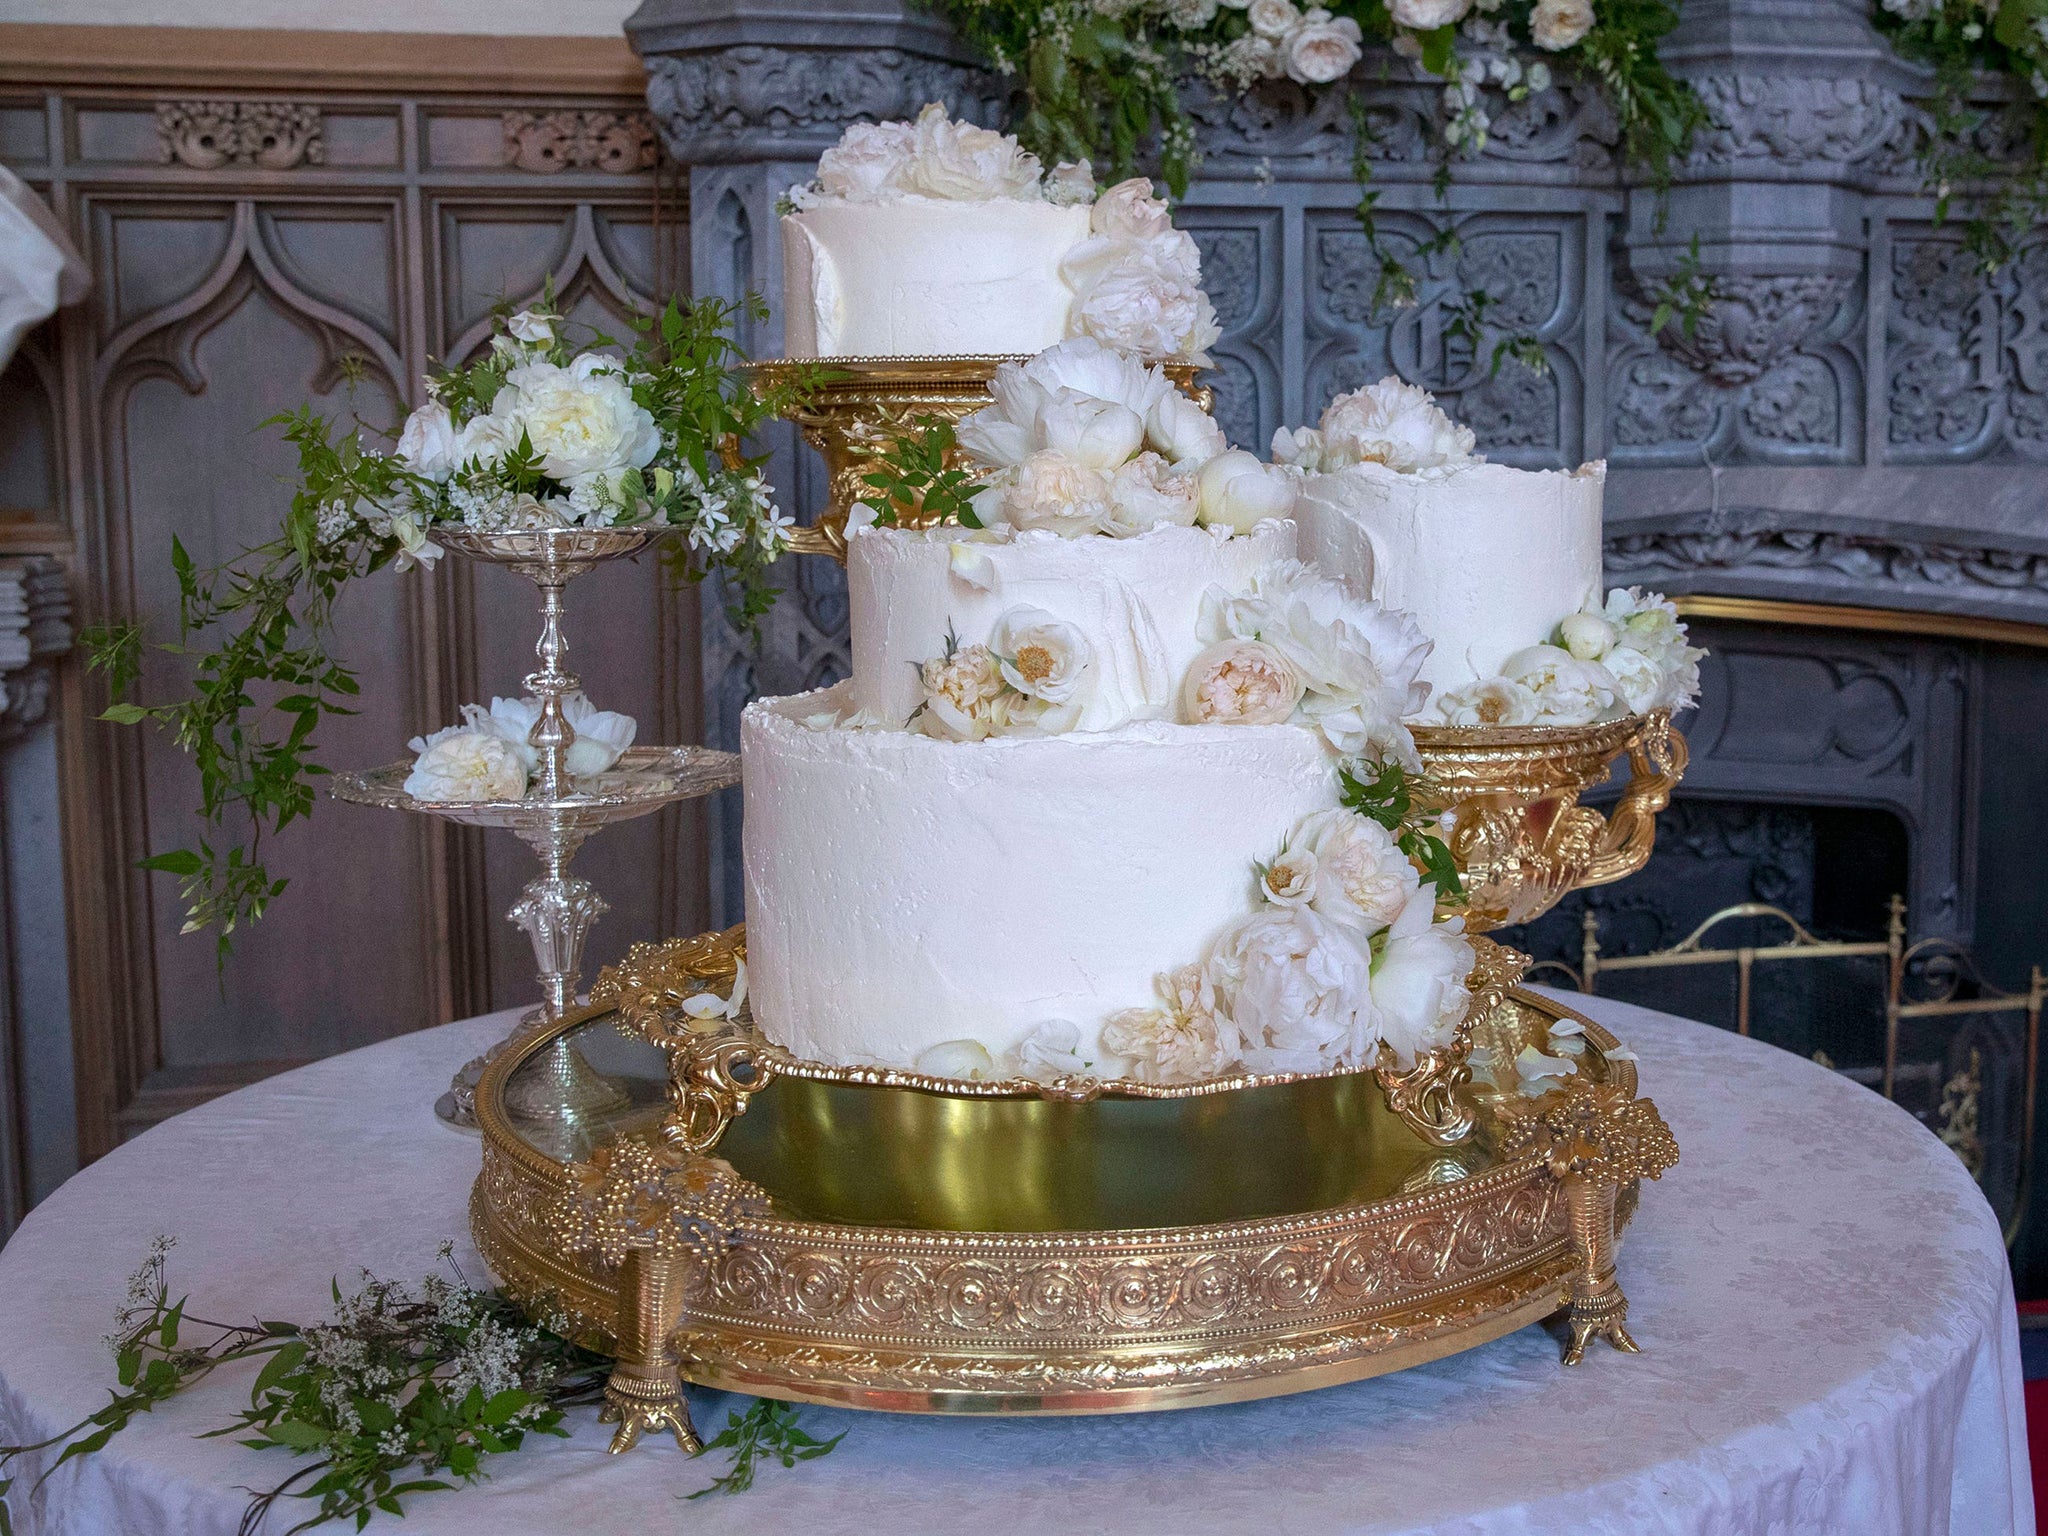 The Duke and Duchess of Sussex’s wedding cake